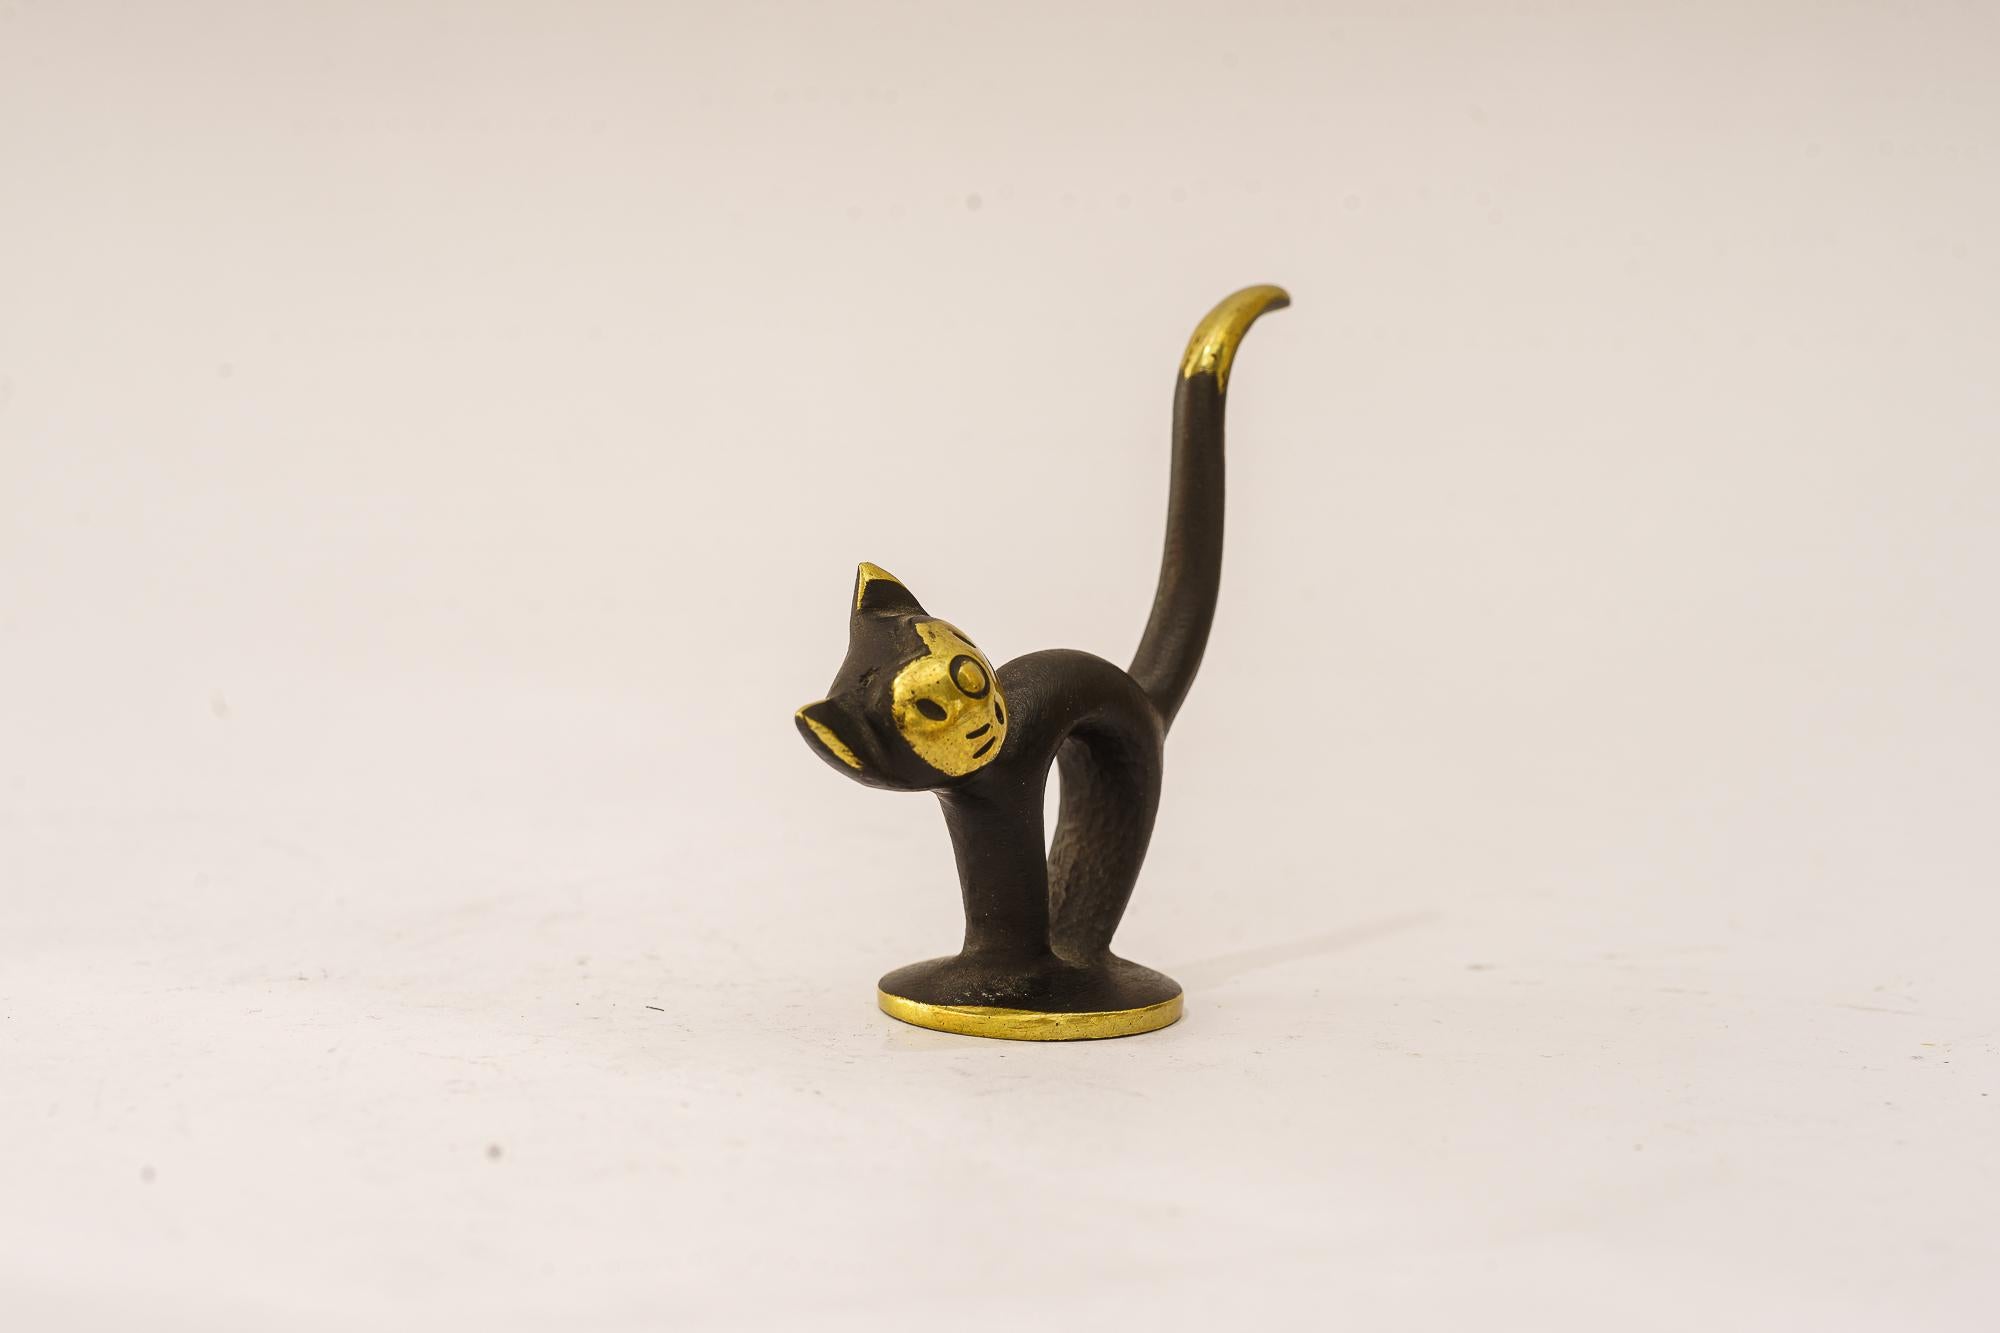 Walter Bosse pour herta Baller figurine de chat vienne vers 1950
Etat original